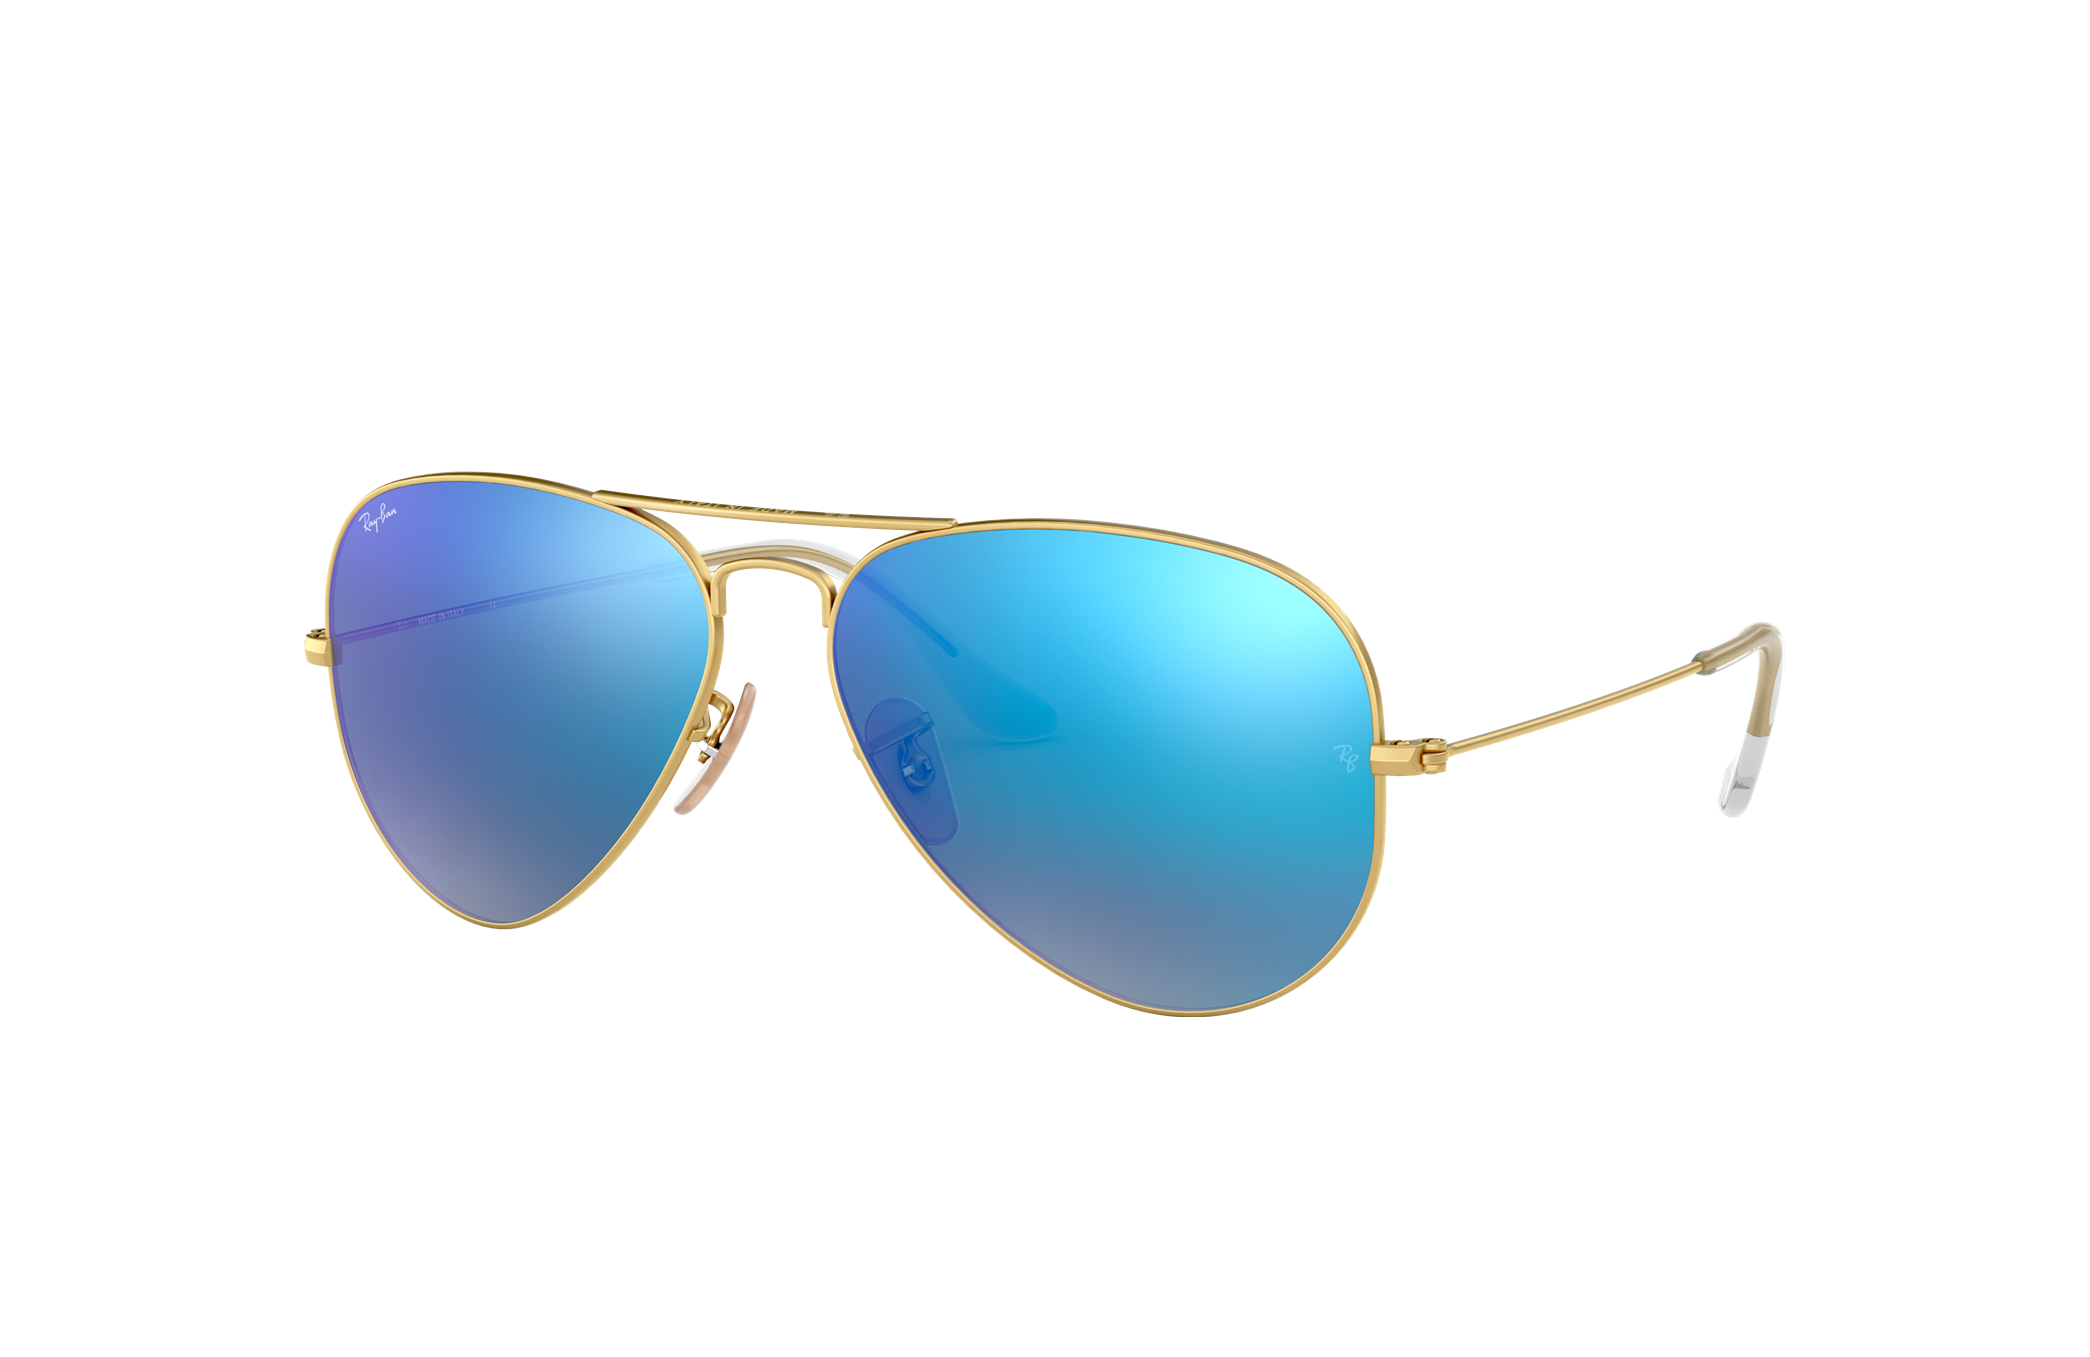 Classic Aviator Sunglasses for Men Women Flat Top Round Frame SILVER BLUE 